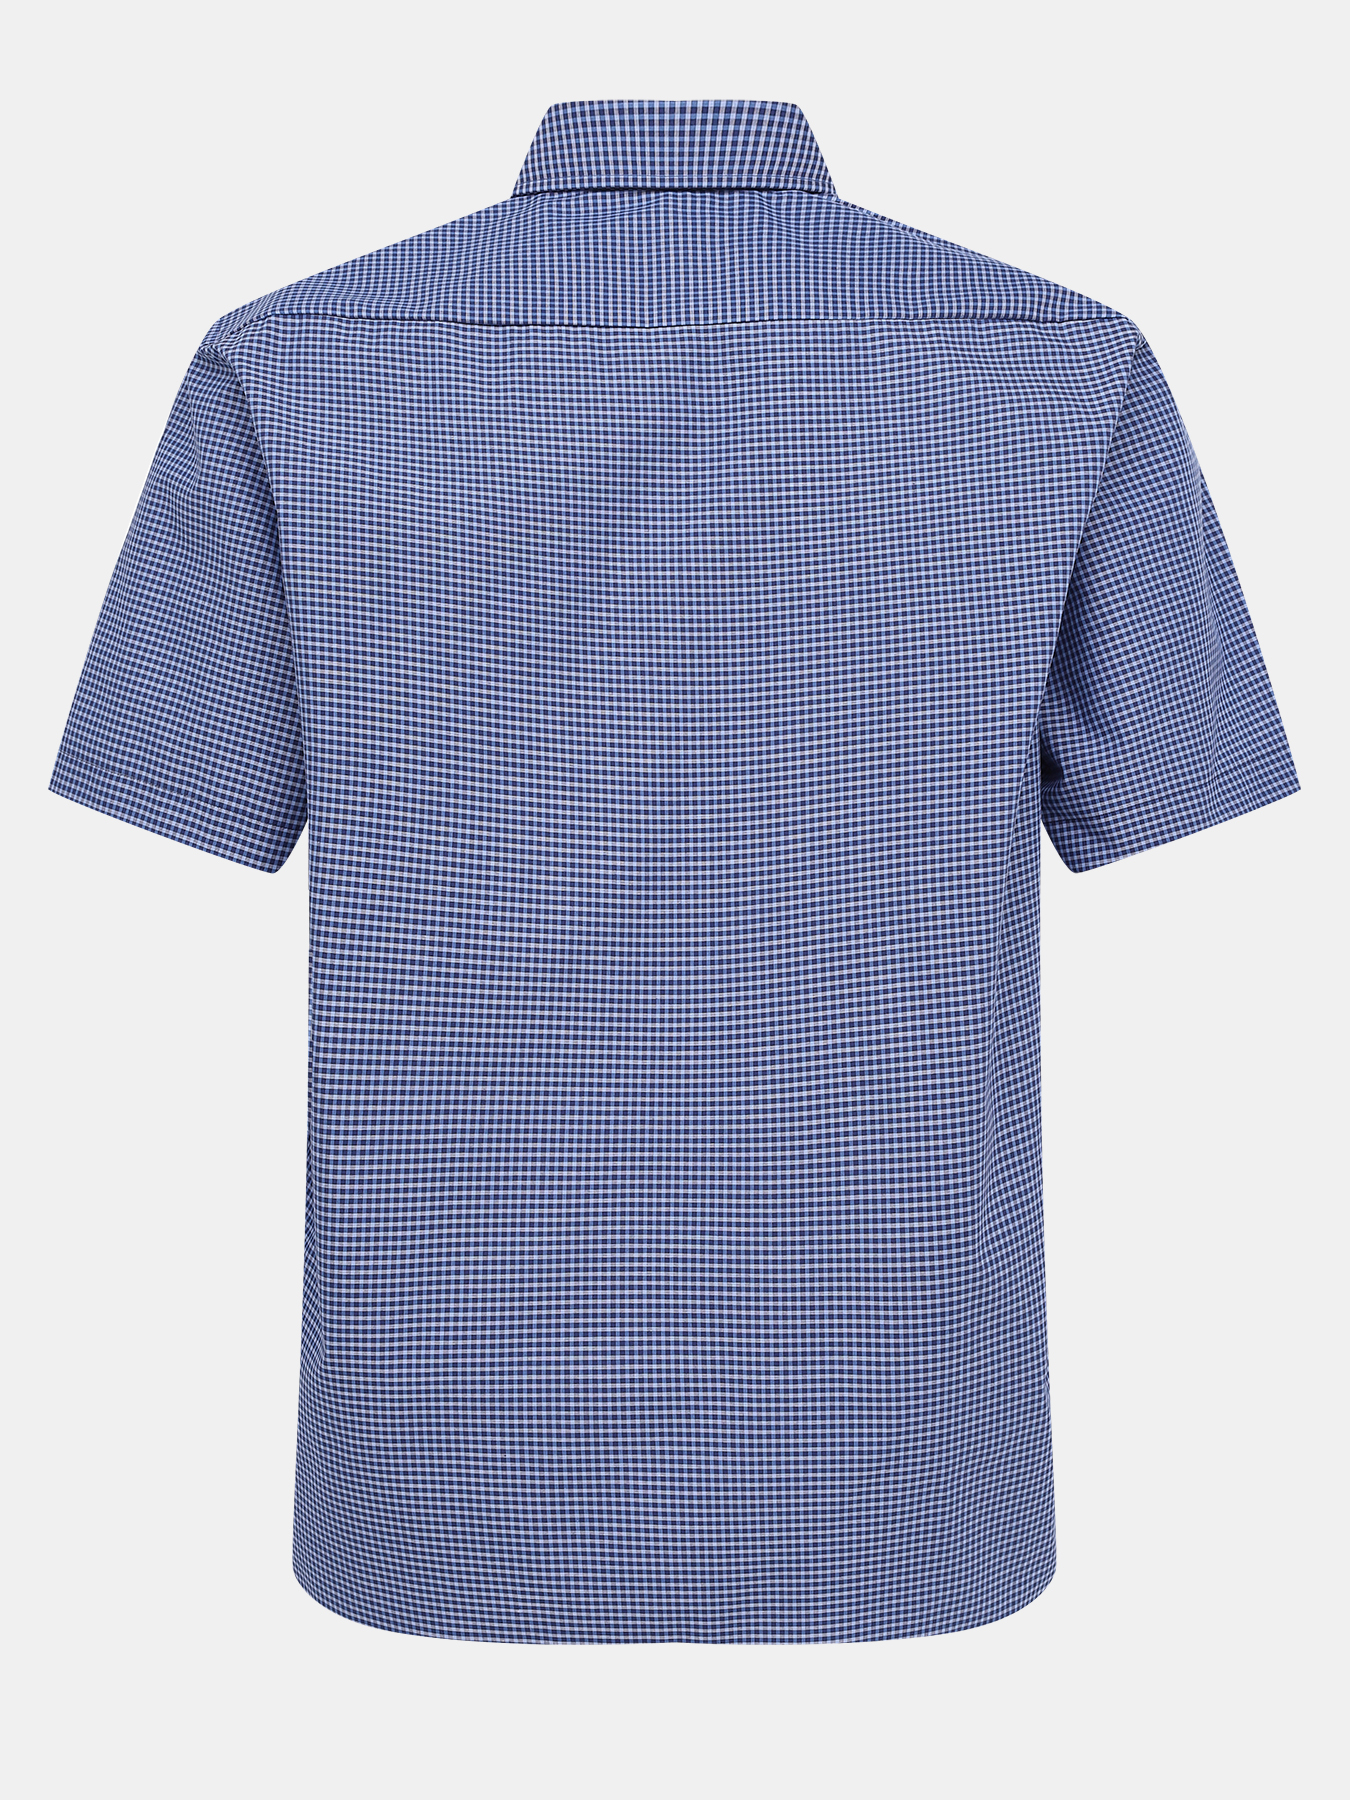 Рубашка Eterna 416186-023, цвет темно-синий, размер 58 - фото 2